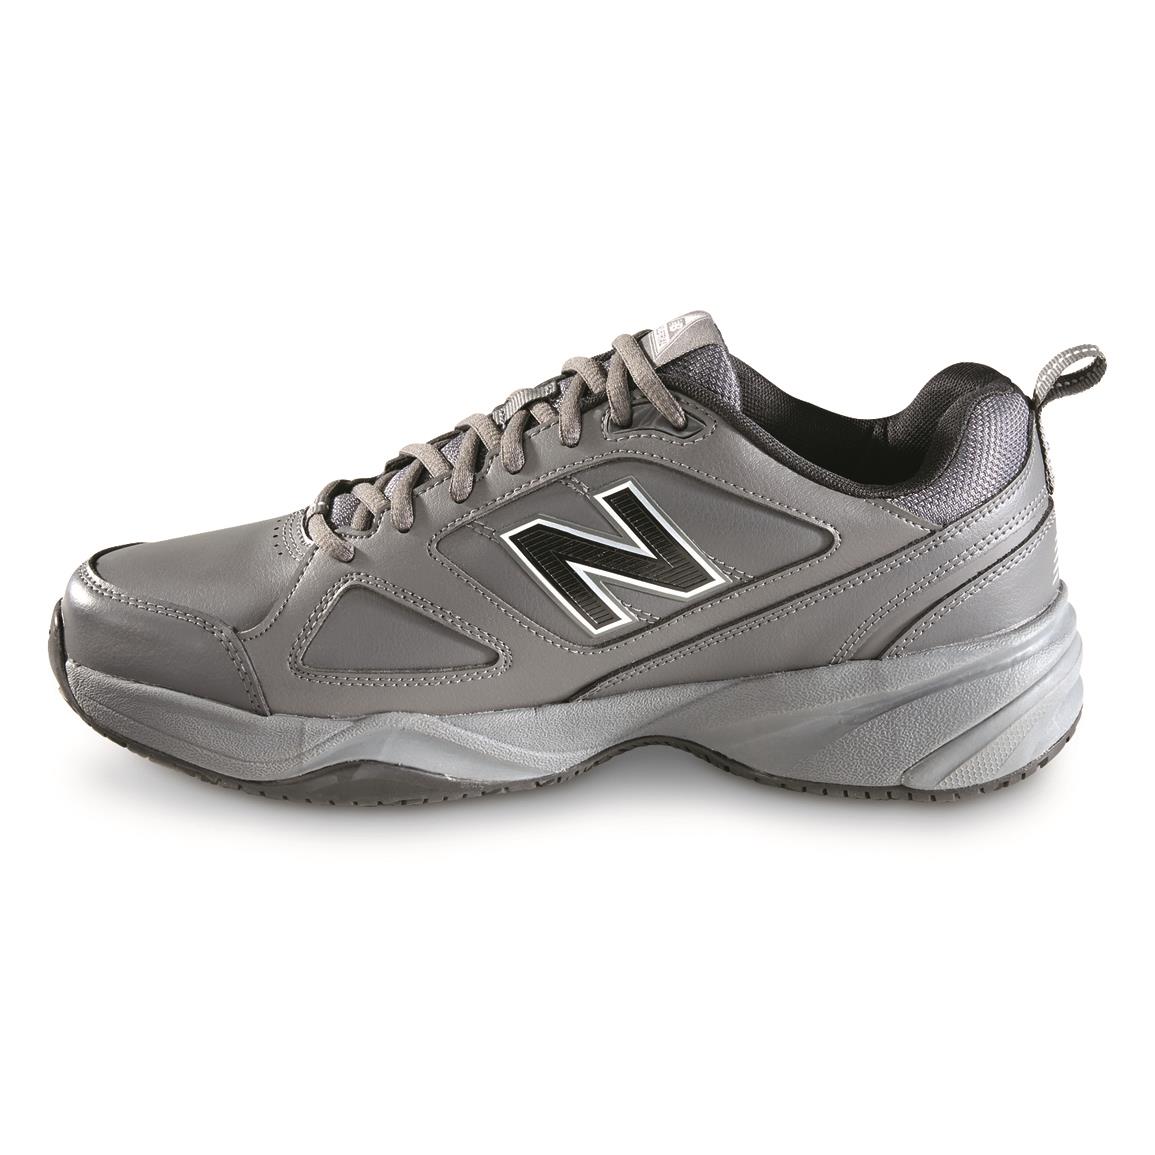 New Balance Men's 626 Slip-resistant Shoes - 282578, Running Shoes ...